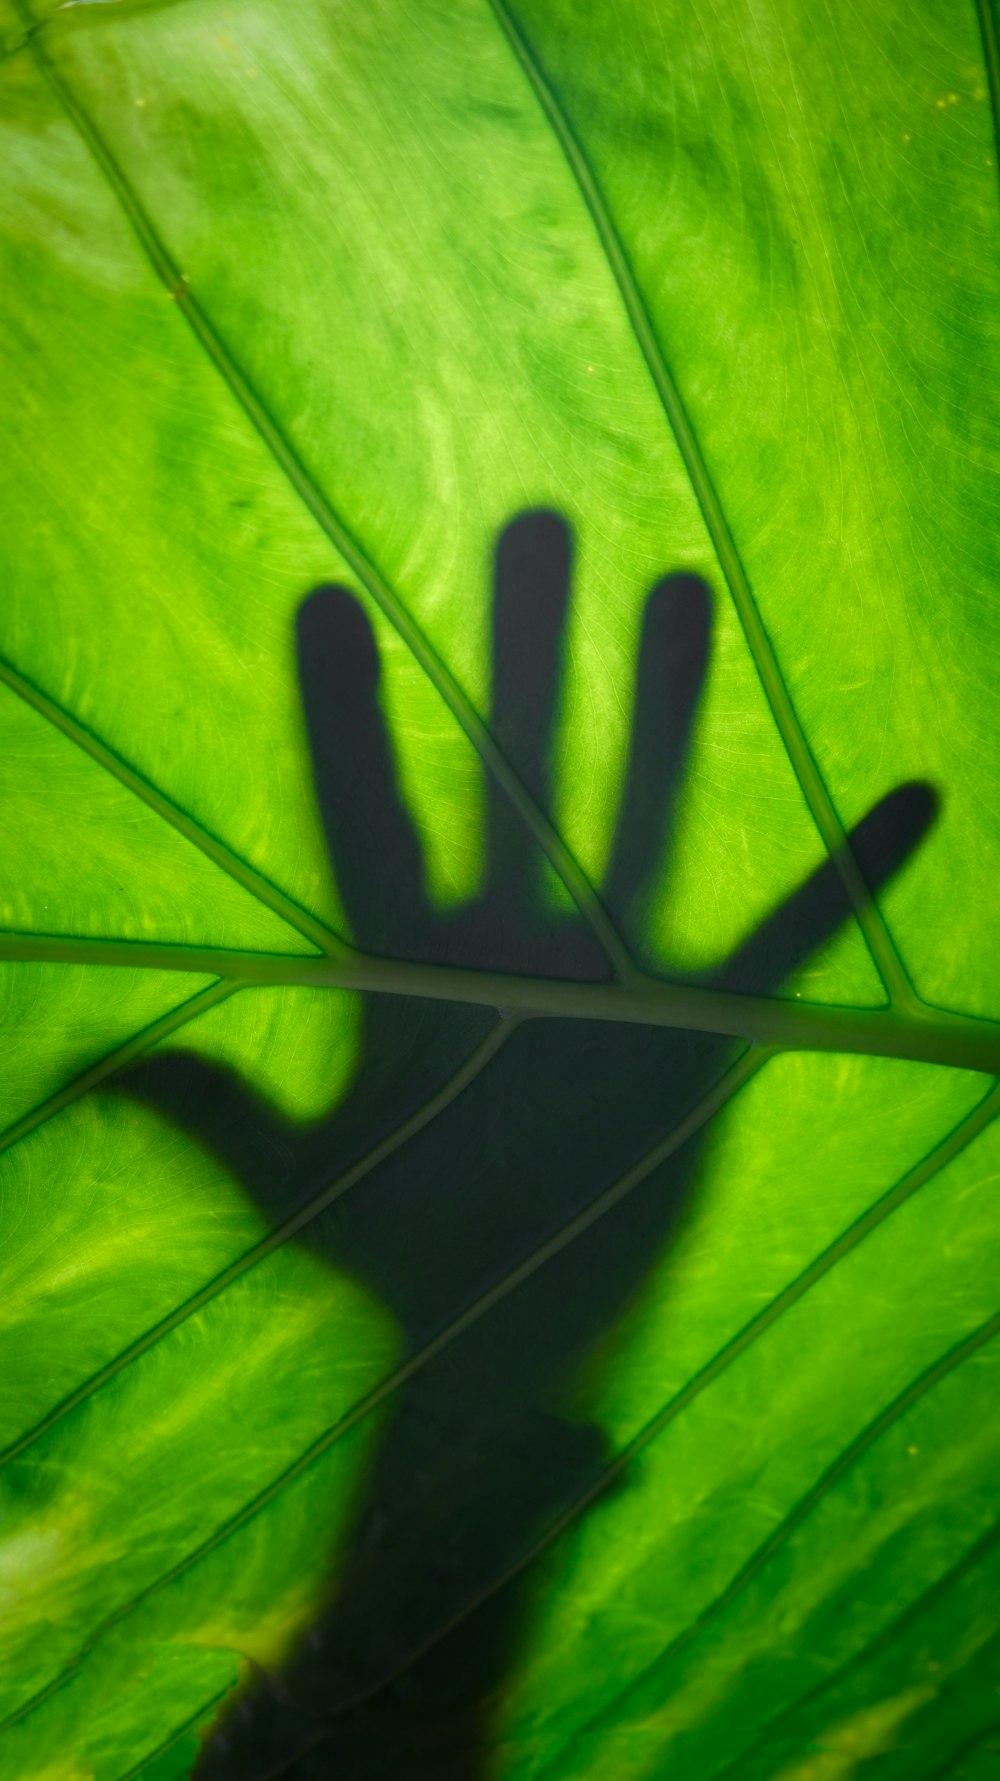 a shadow of a hand on a green leaf